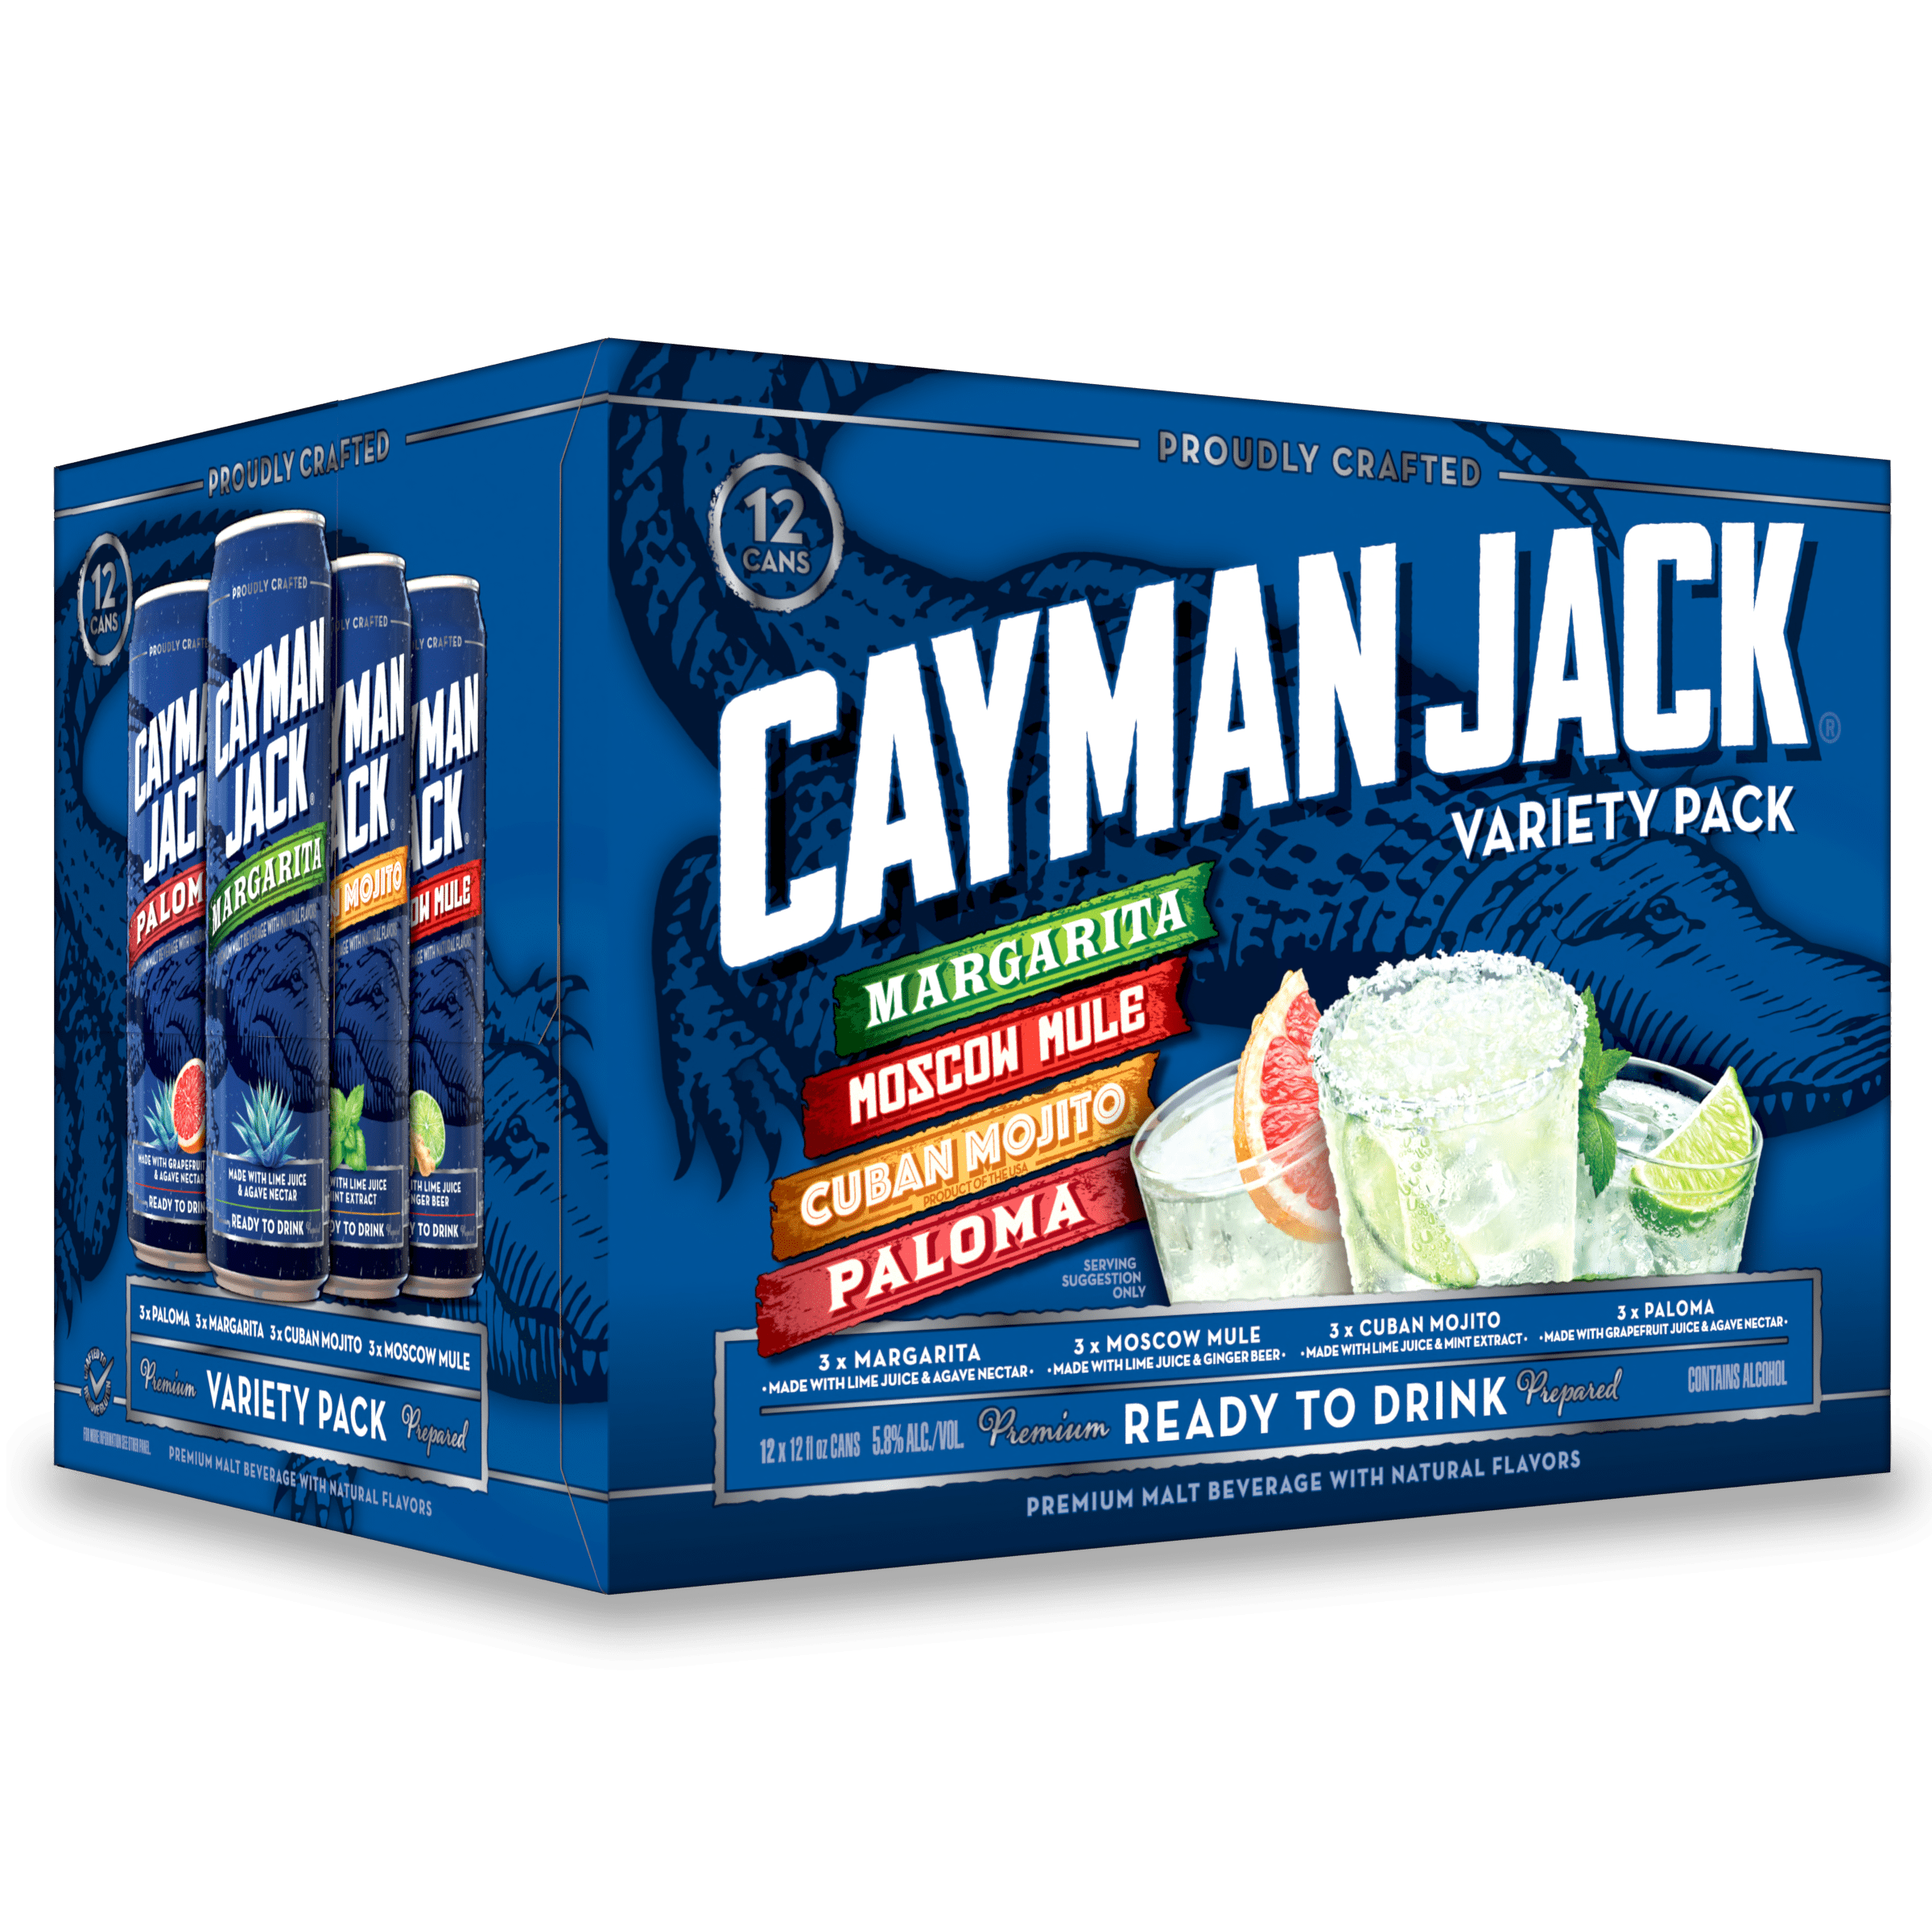 Cayman Jack 5 Rebate